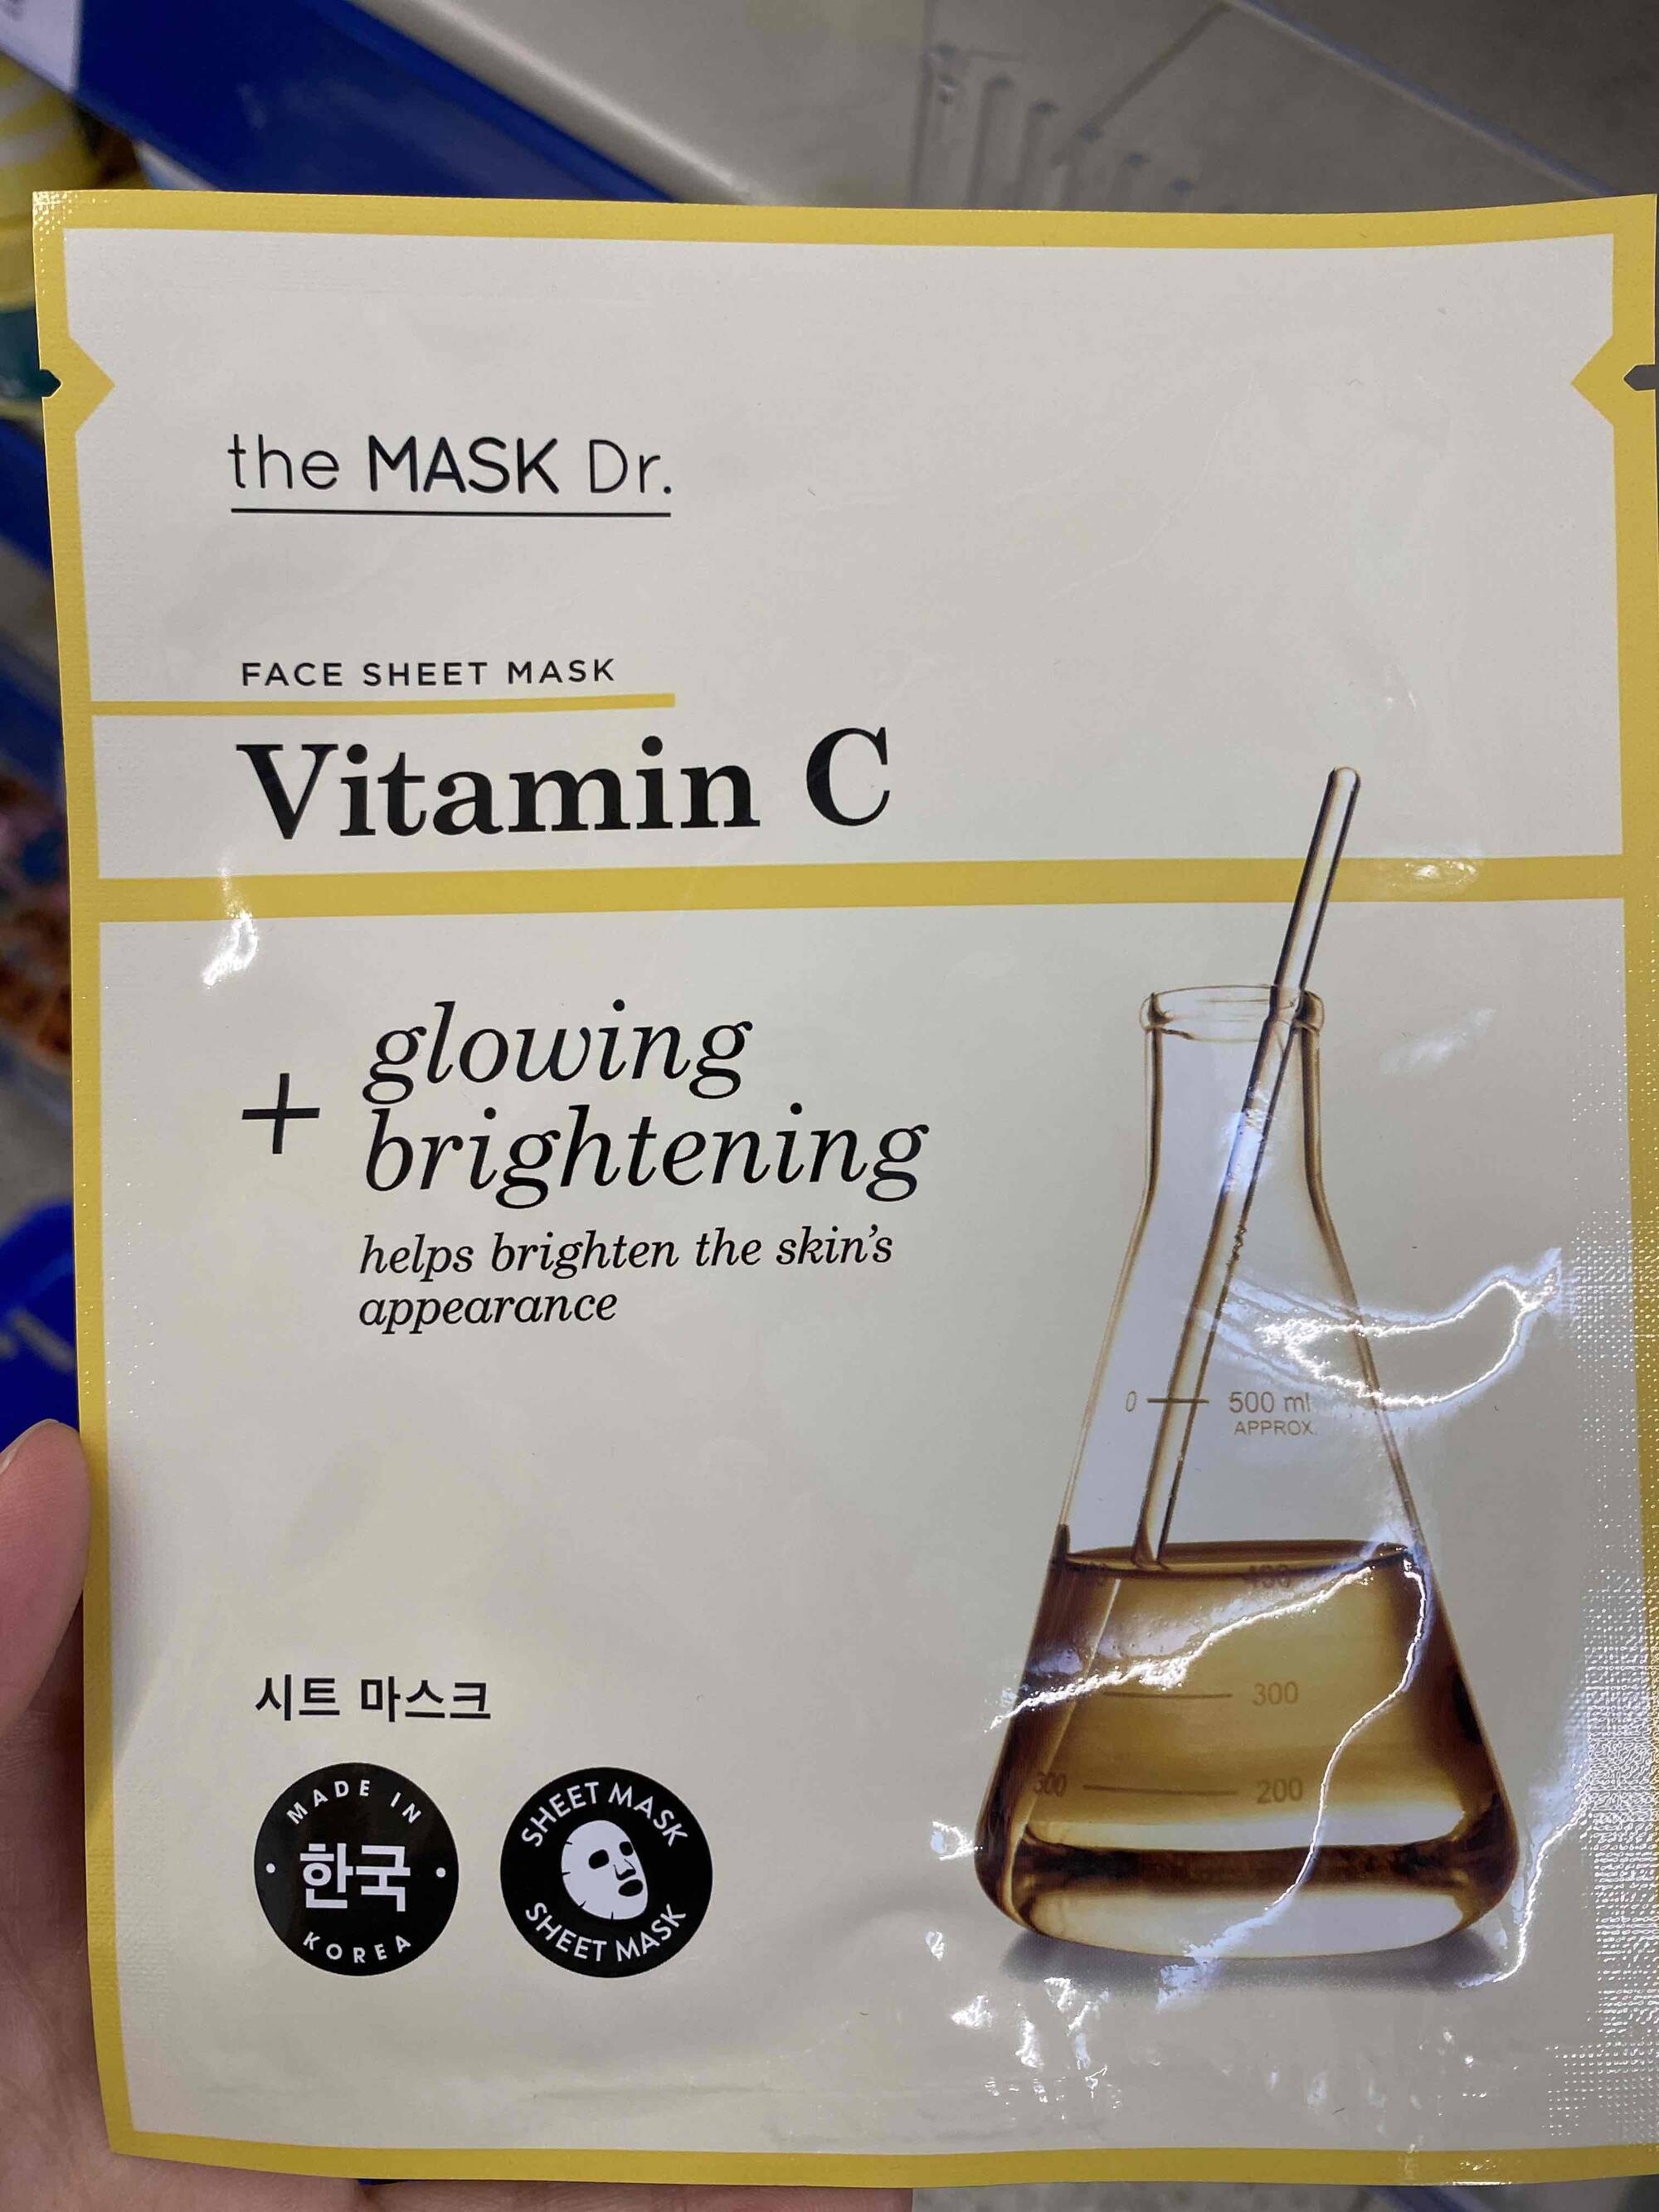 THE MASK DR. - Vitamine C - Face sheet mask